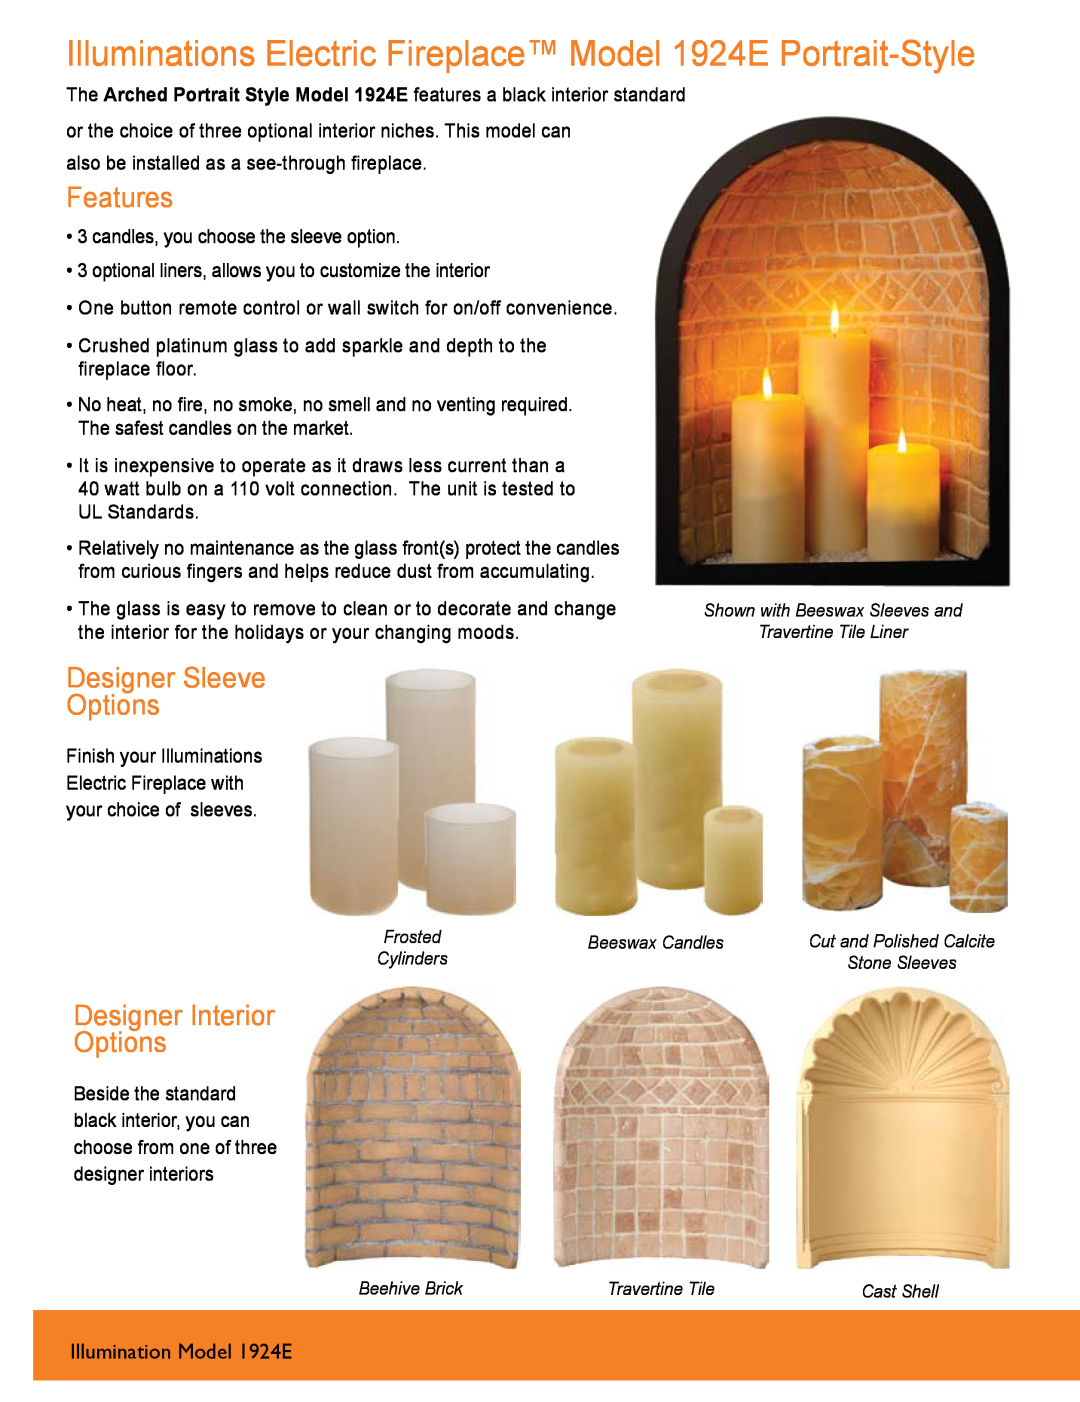 FireplaceXtrordinair 4915E manual Features, Designer Sleeve Options, Designer Interior Options, Illumination Model 1924E 